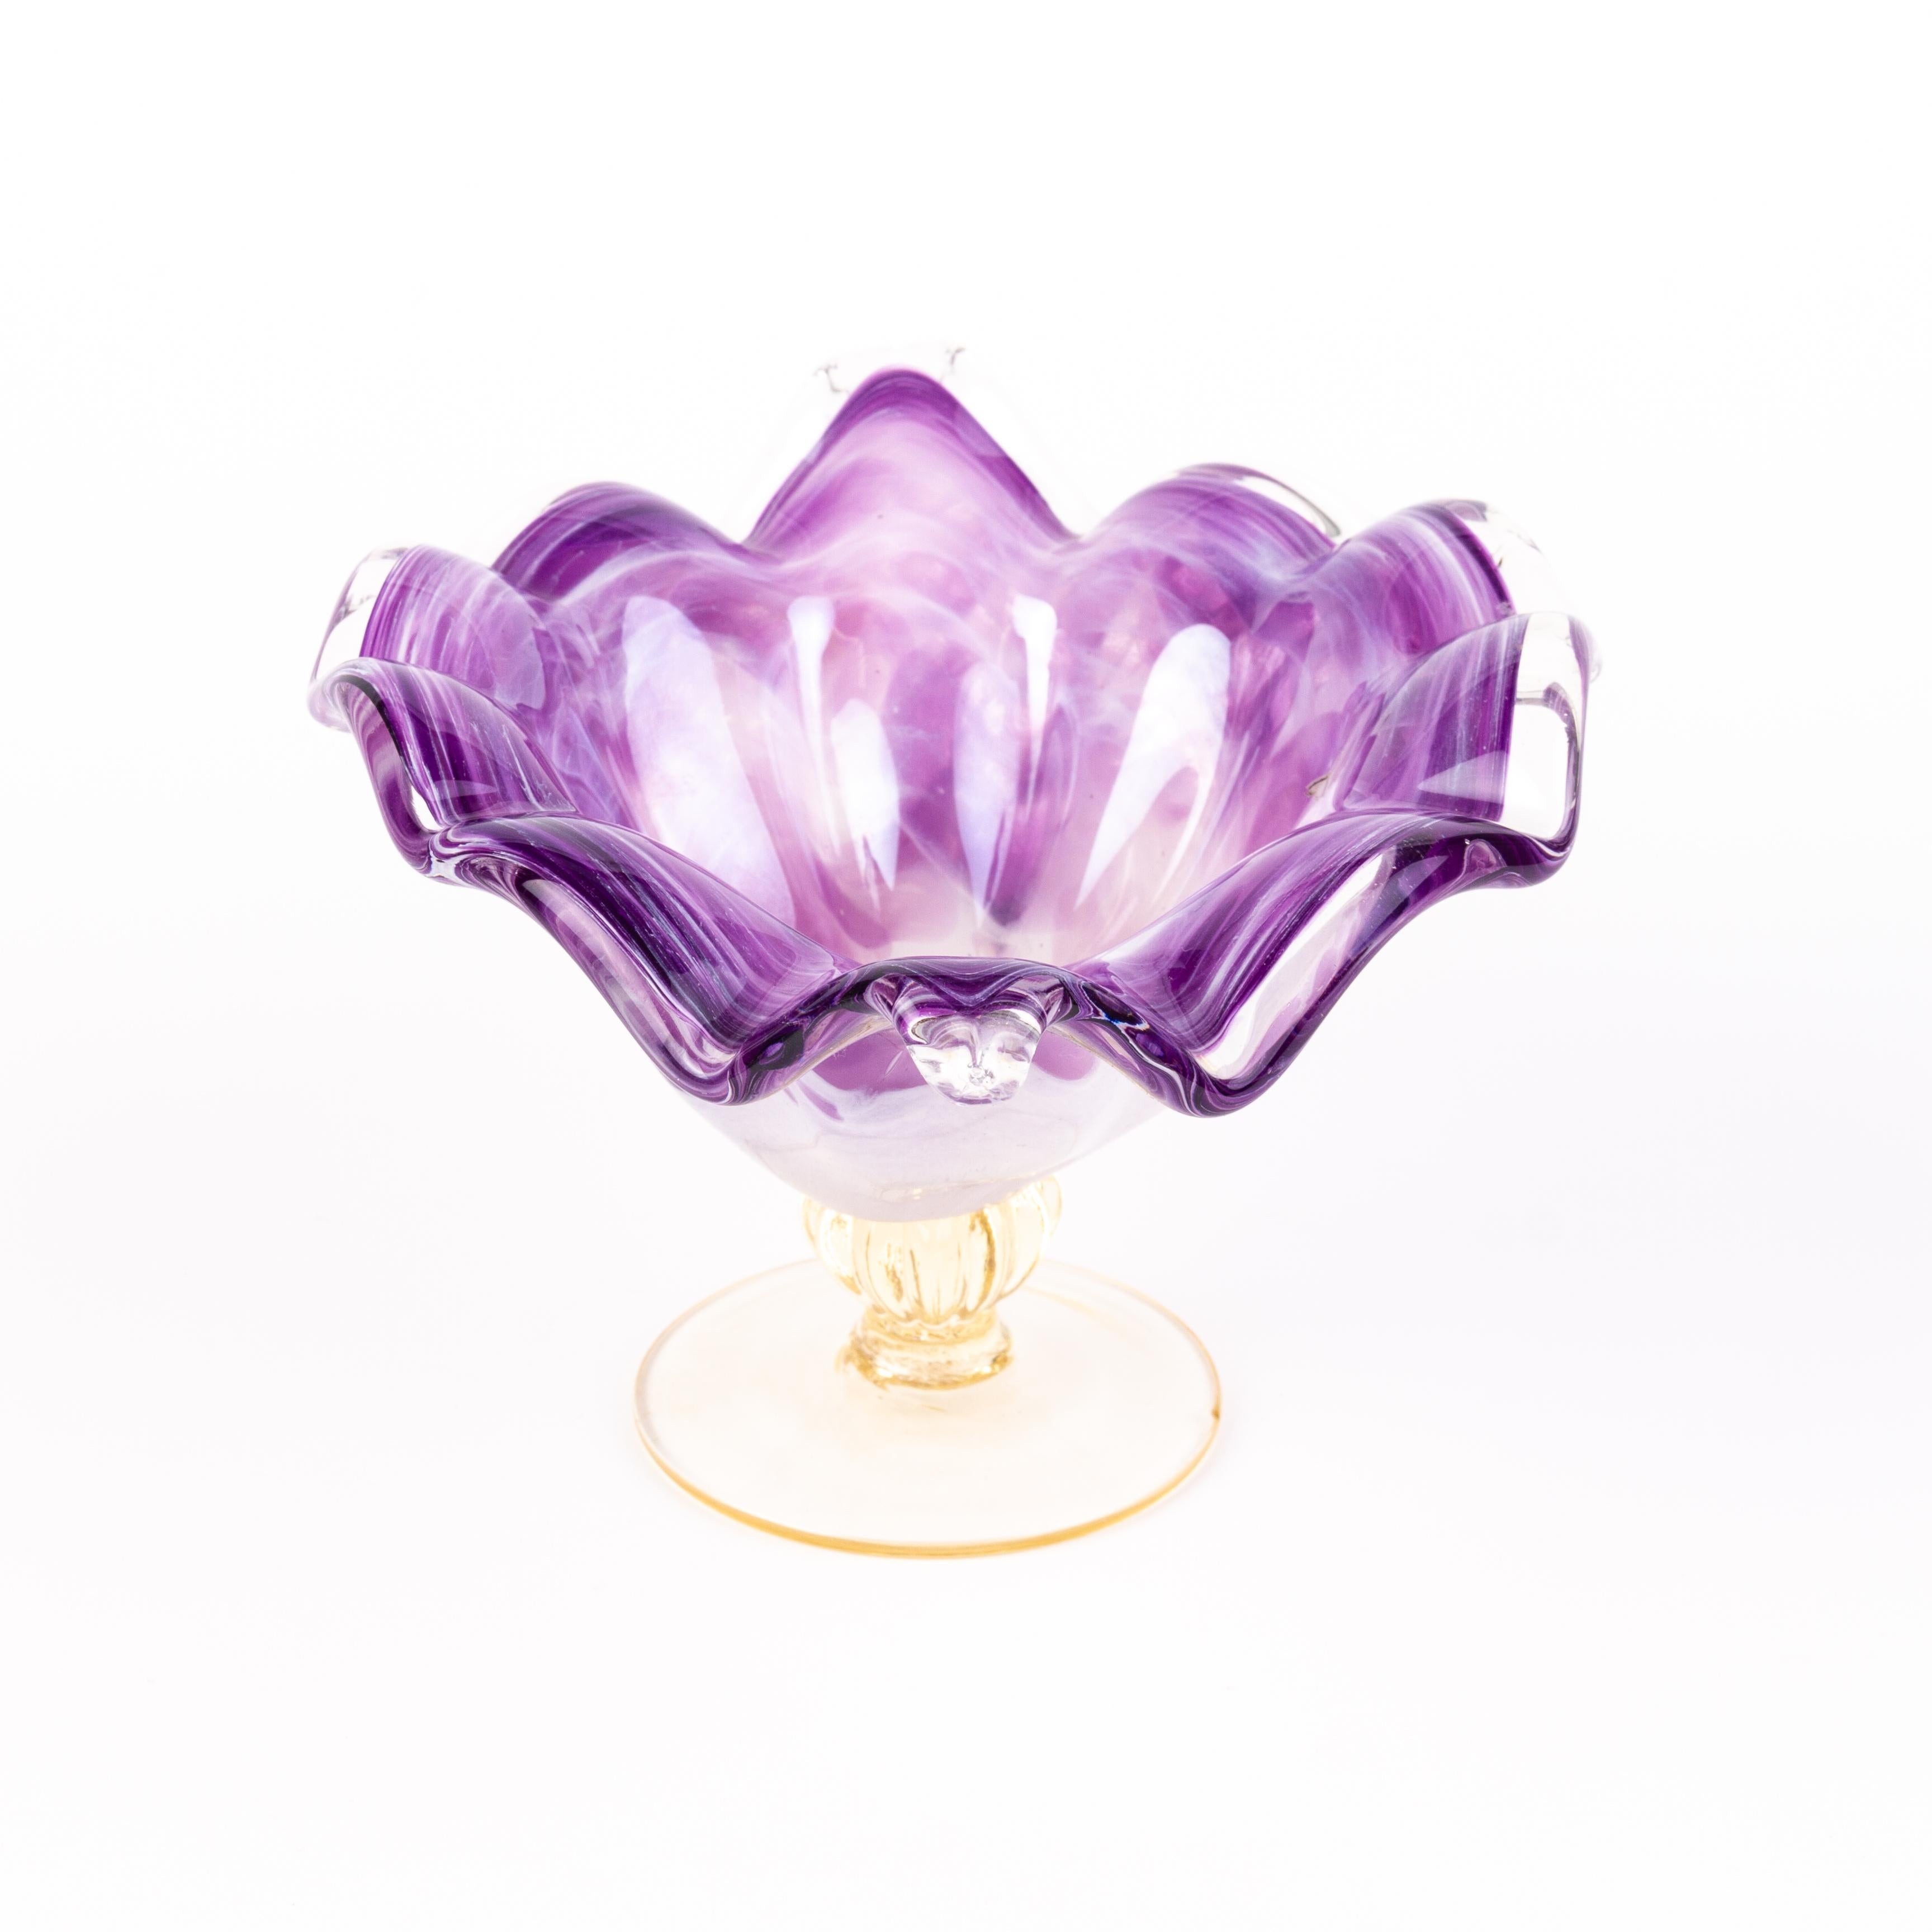 Murano Venetian Glass Centrepiece Bowl 
Good condition
Free international shipping.